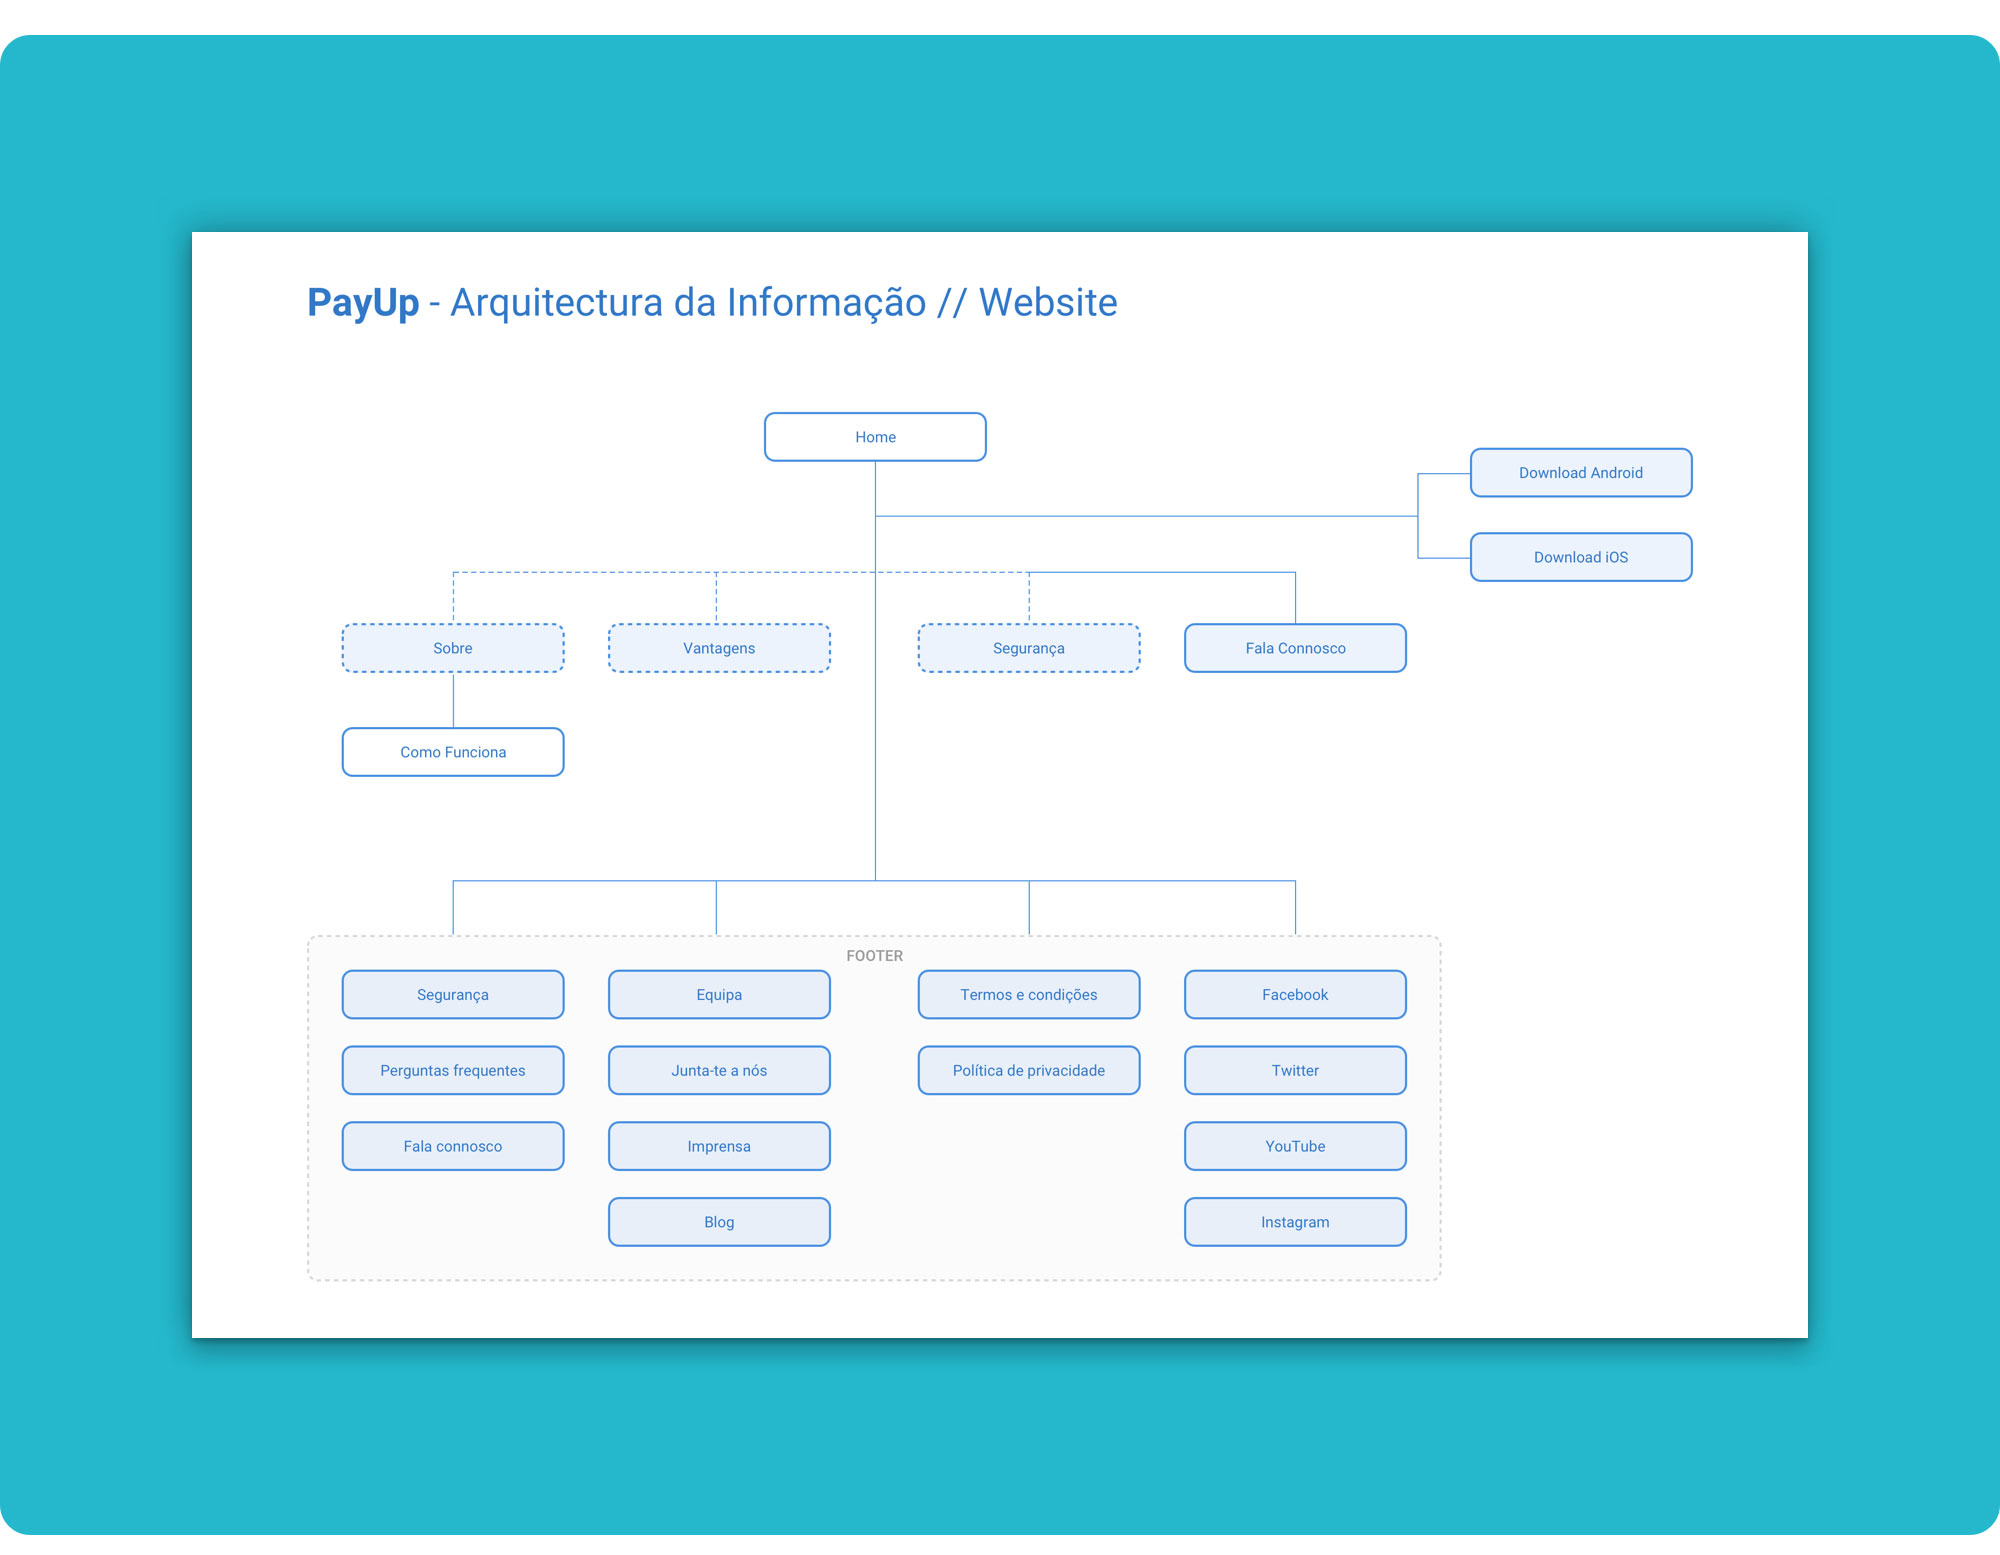 Website's information architecture